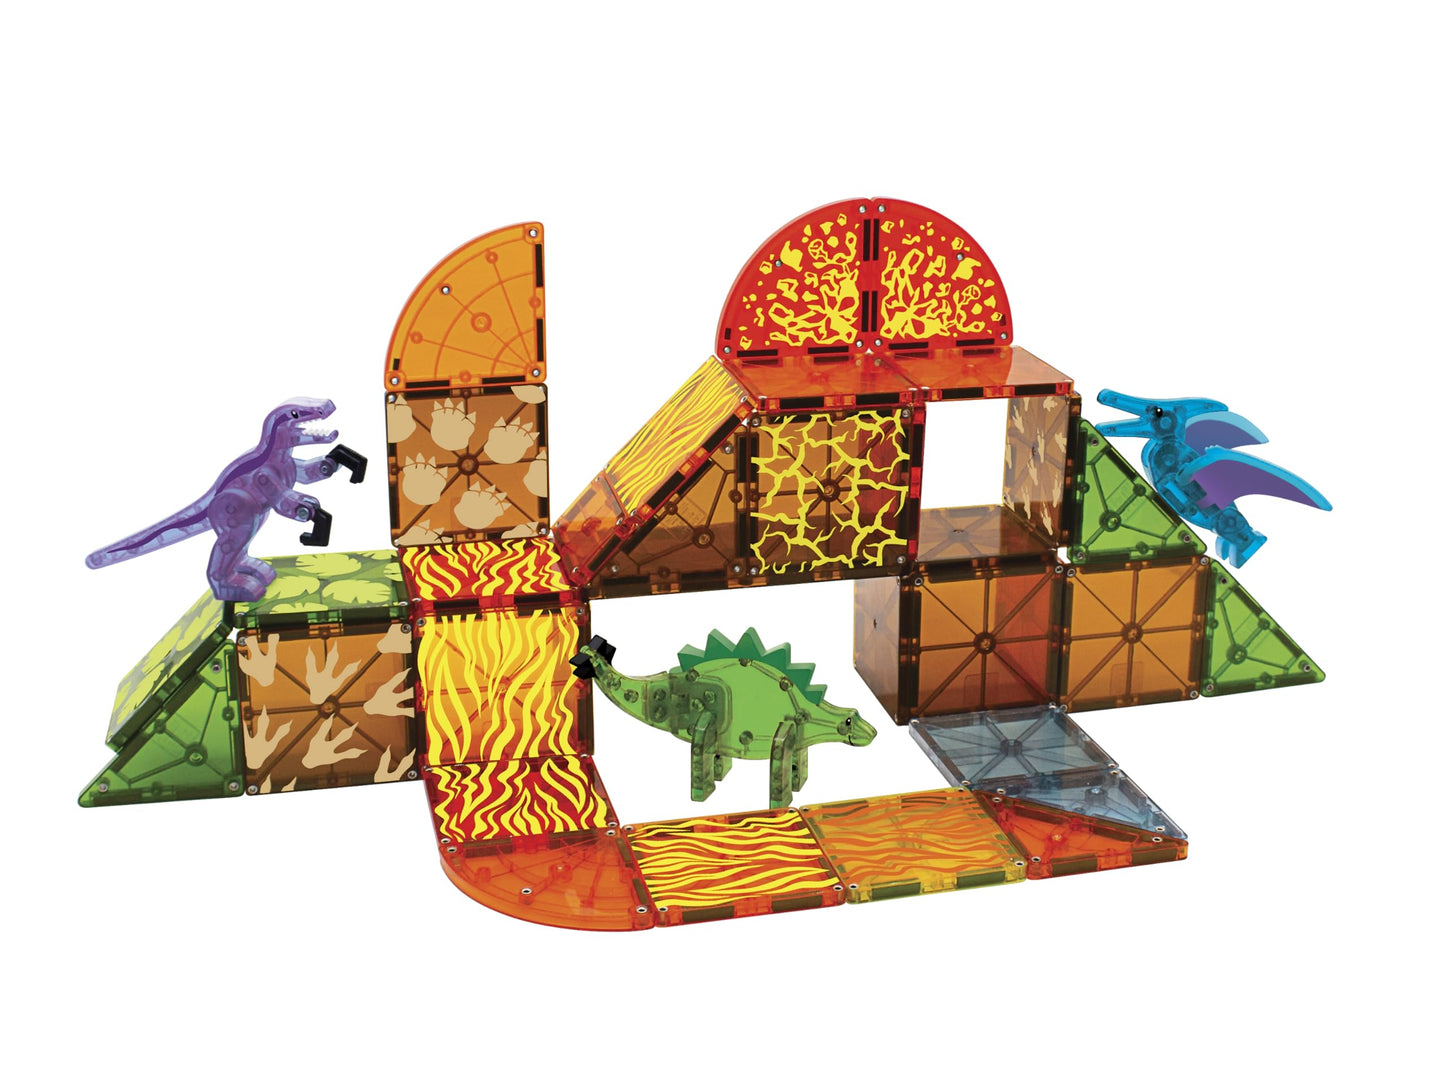 MAGNA-TILES® Dino World 40-Piece Set